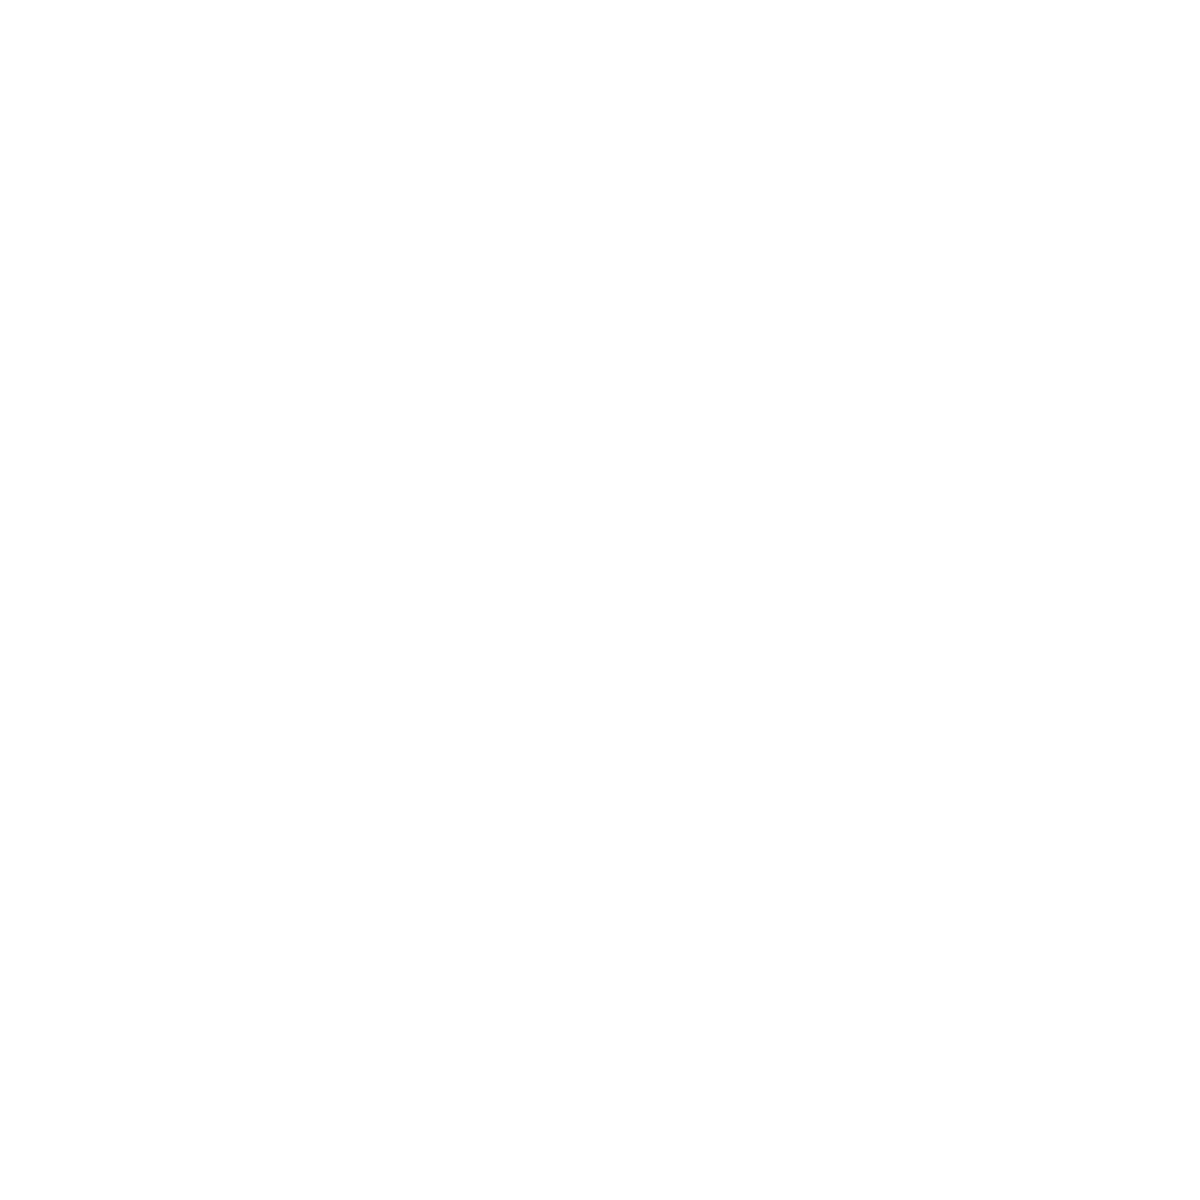 New York City Mayor's Office Of Media and Entertainment Logo